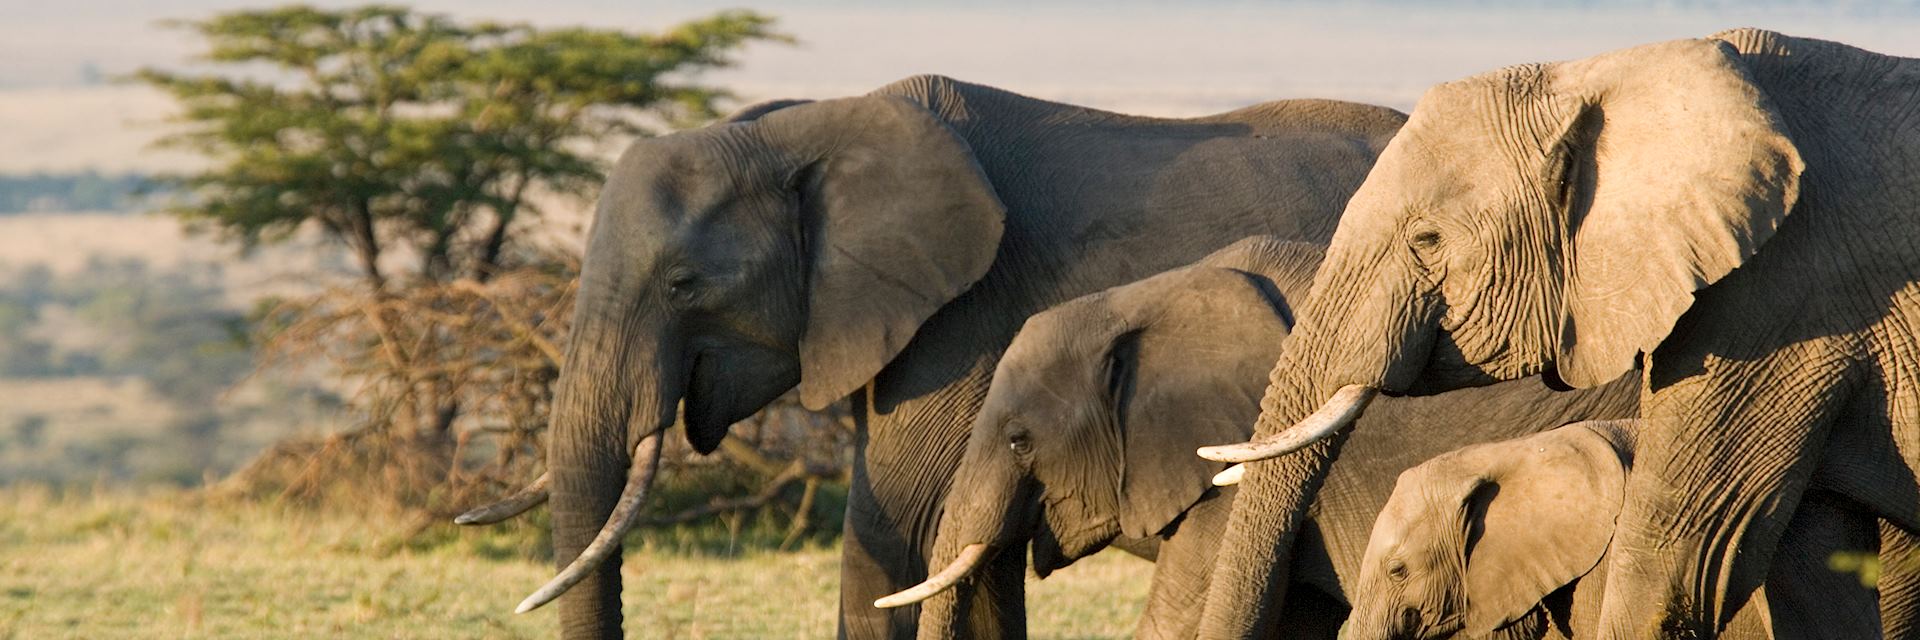 Herd of elephants in South Africa